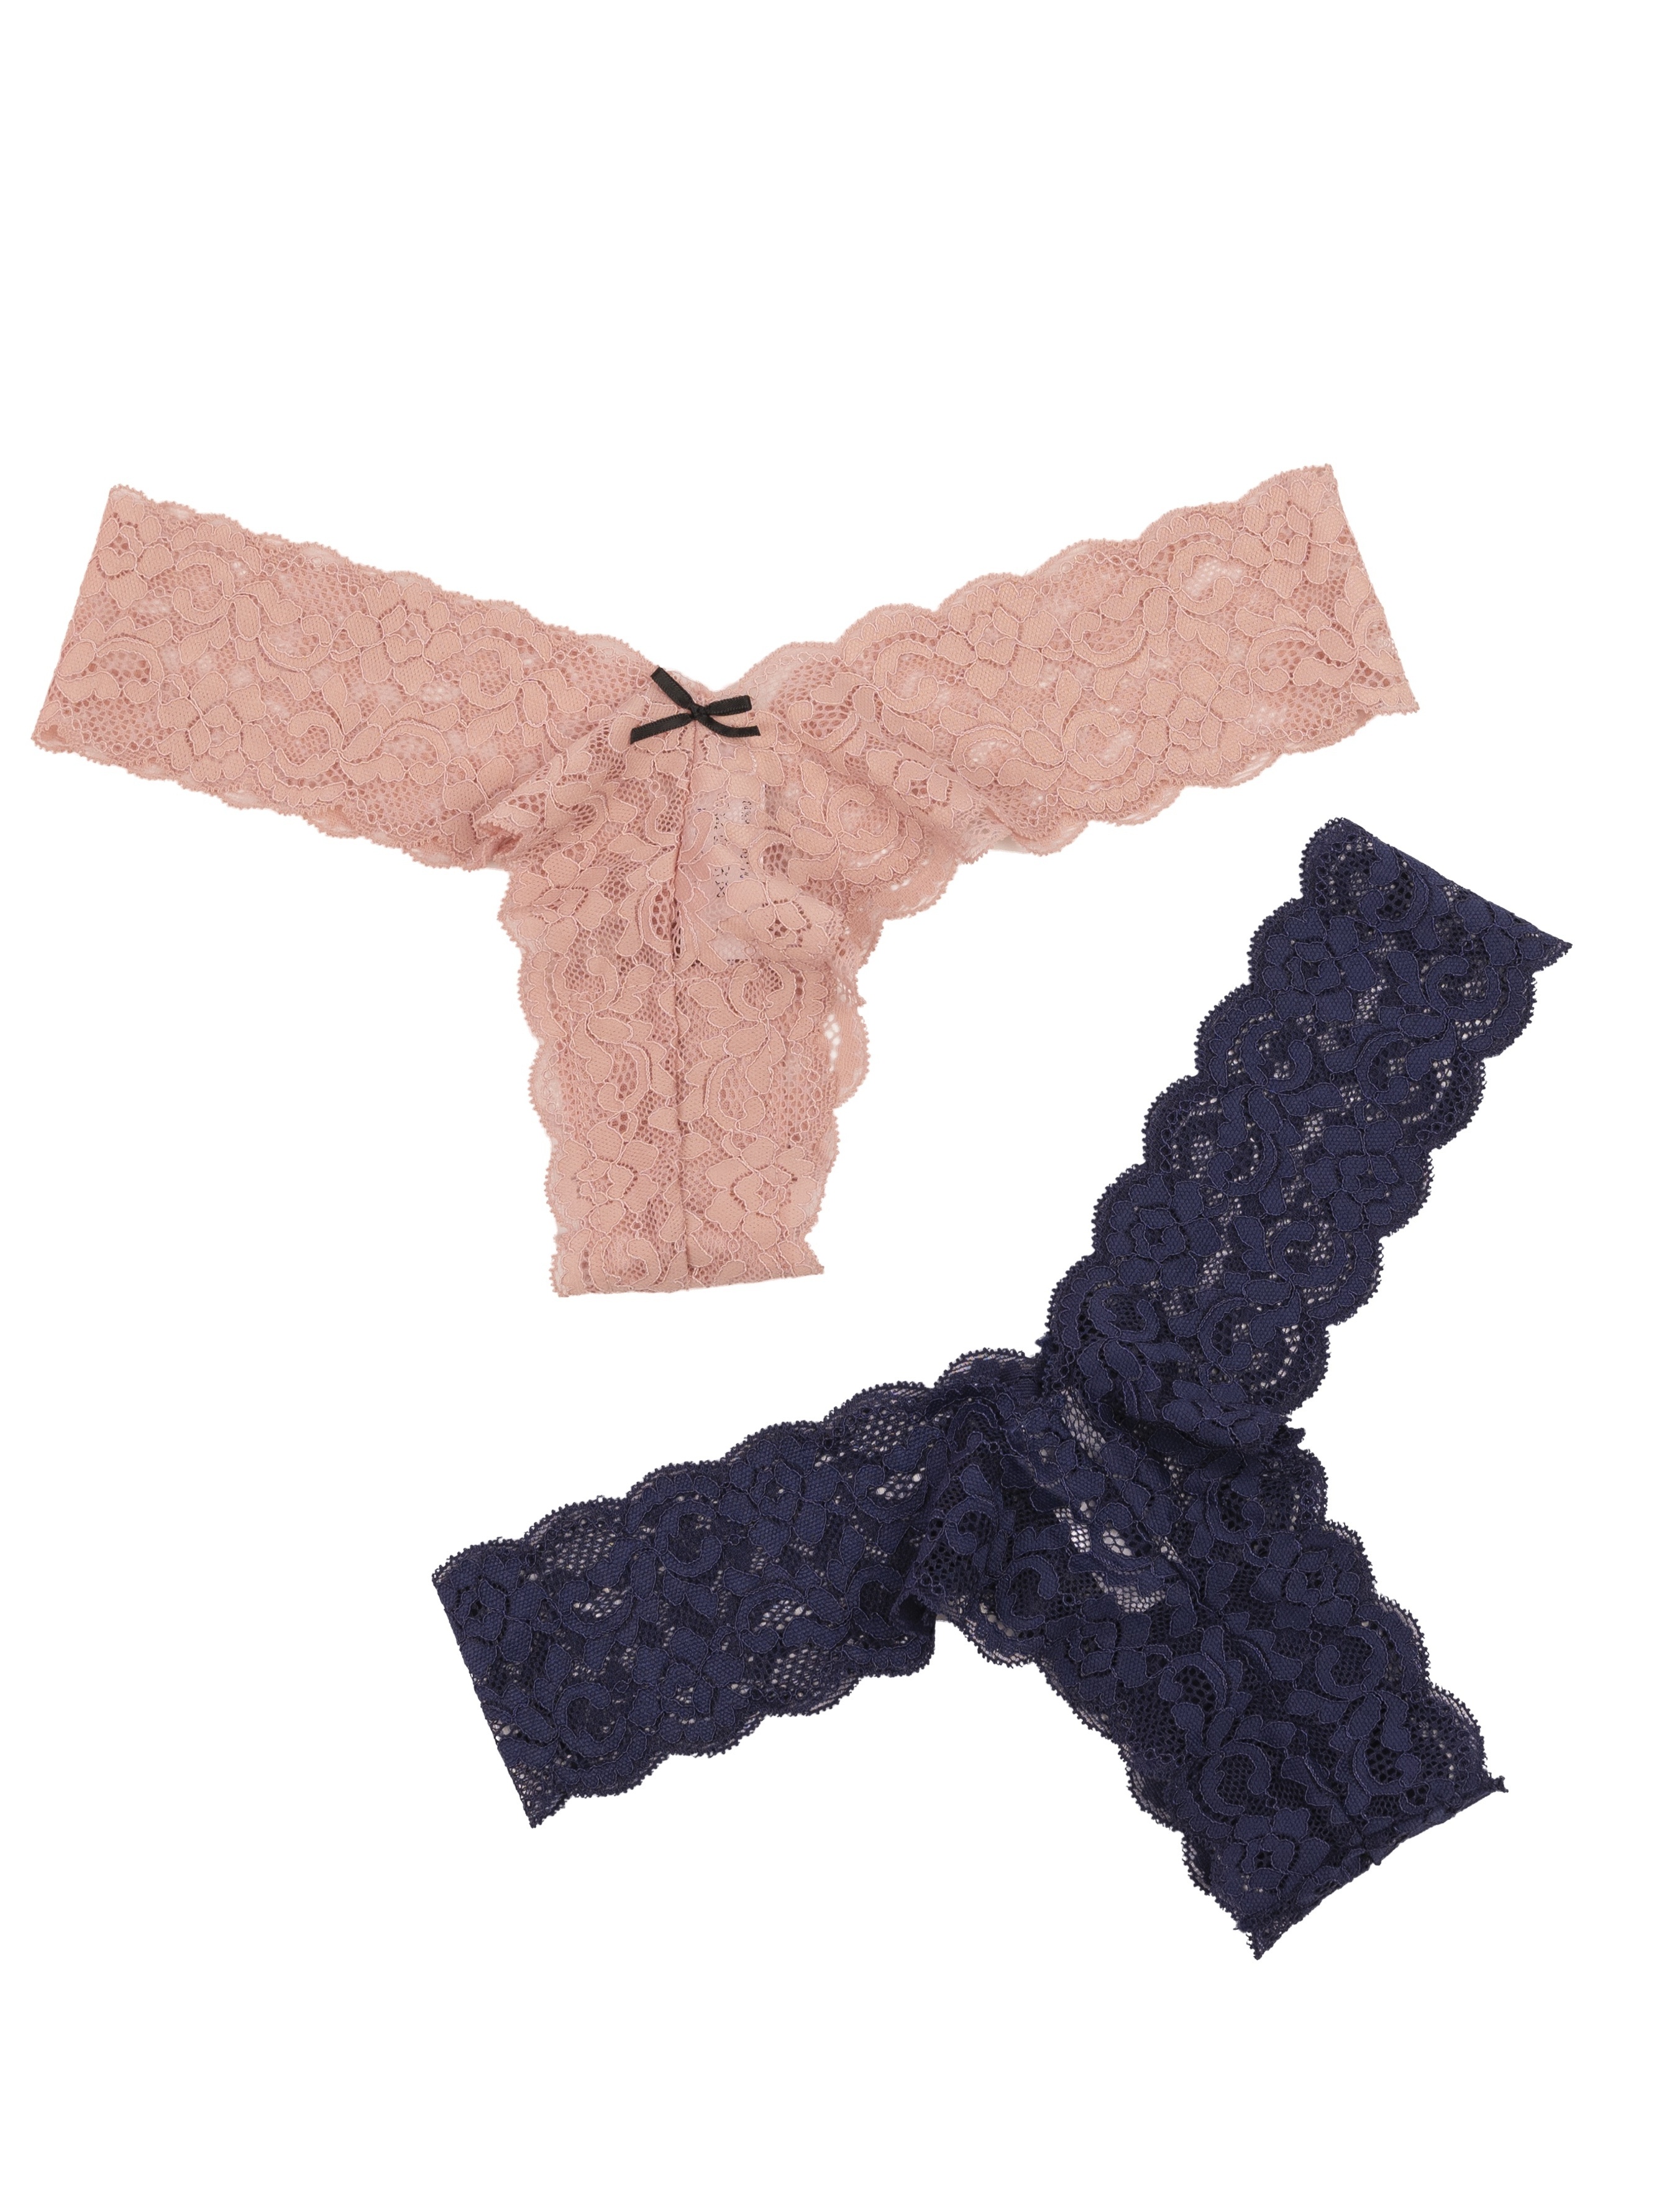 6 Pcs Women's Contrast Color Floral Lace Trim Cheeky Panties, Semi-Sheer  Floral Lace Thong Panties with Bow Tie, Women's Lingerie & Underwear